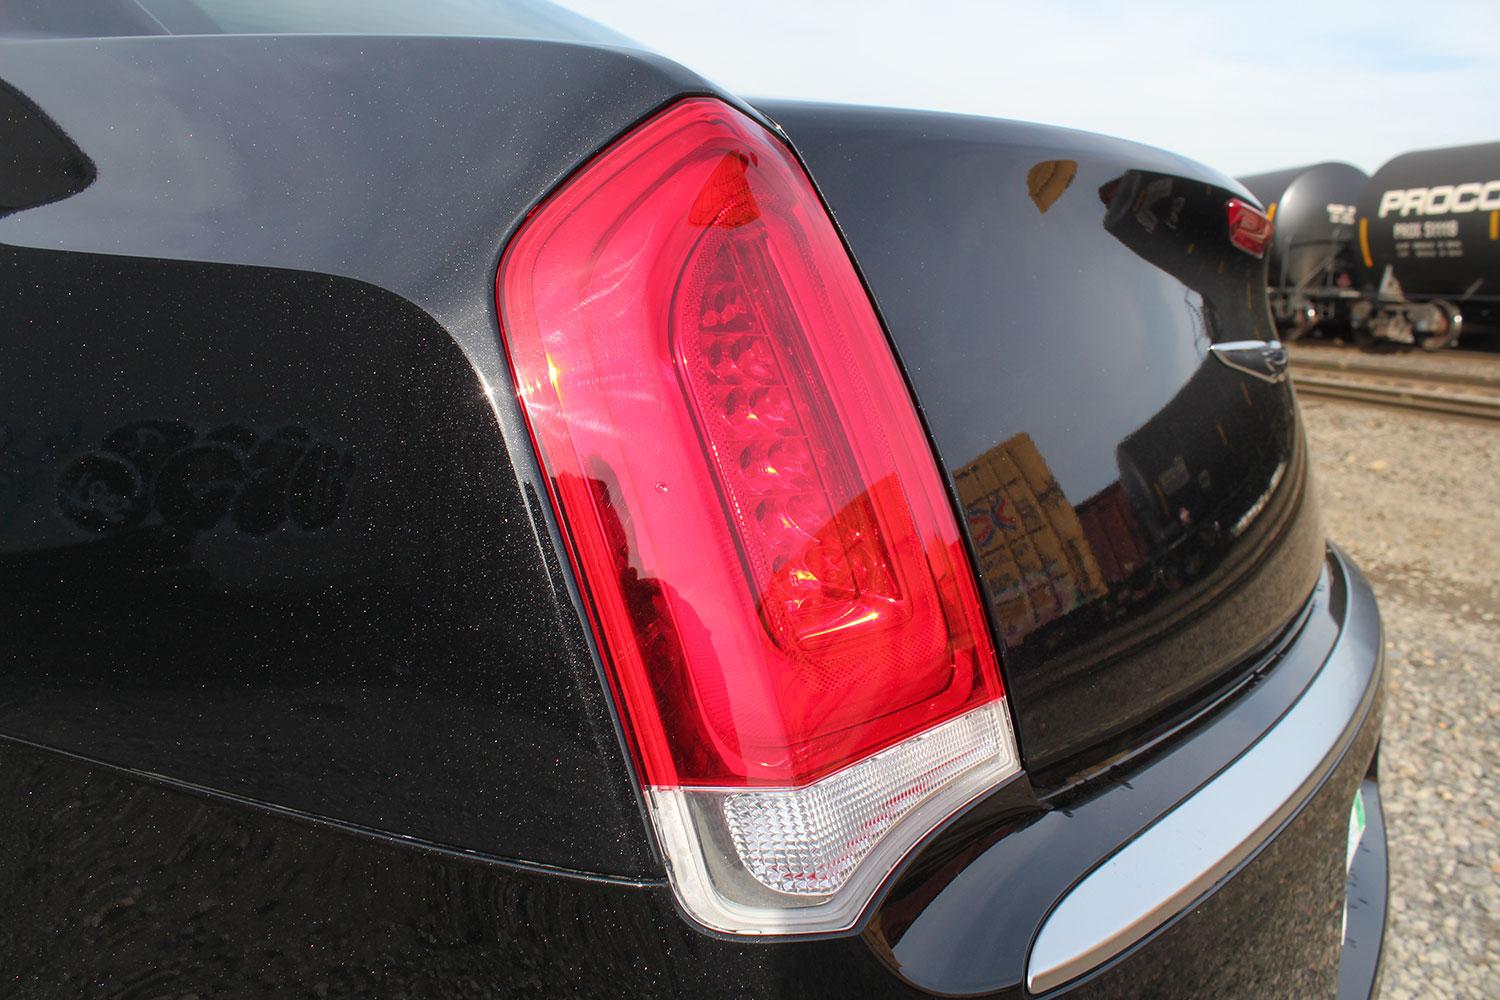 2015 Chrysler 300C Platinum: The Likeable Dinosaur - The Car Guide